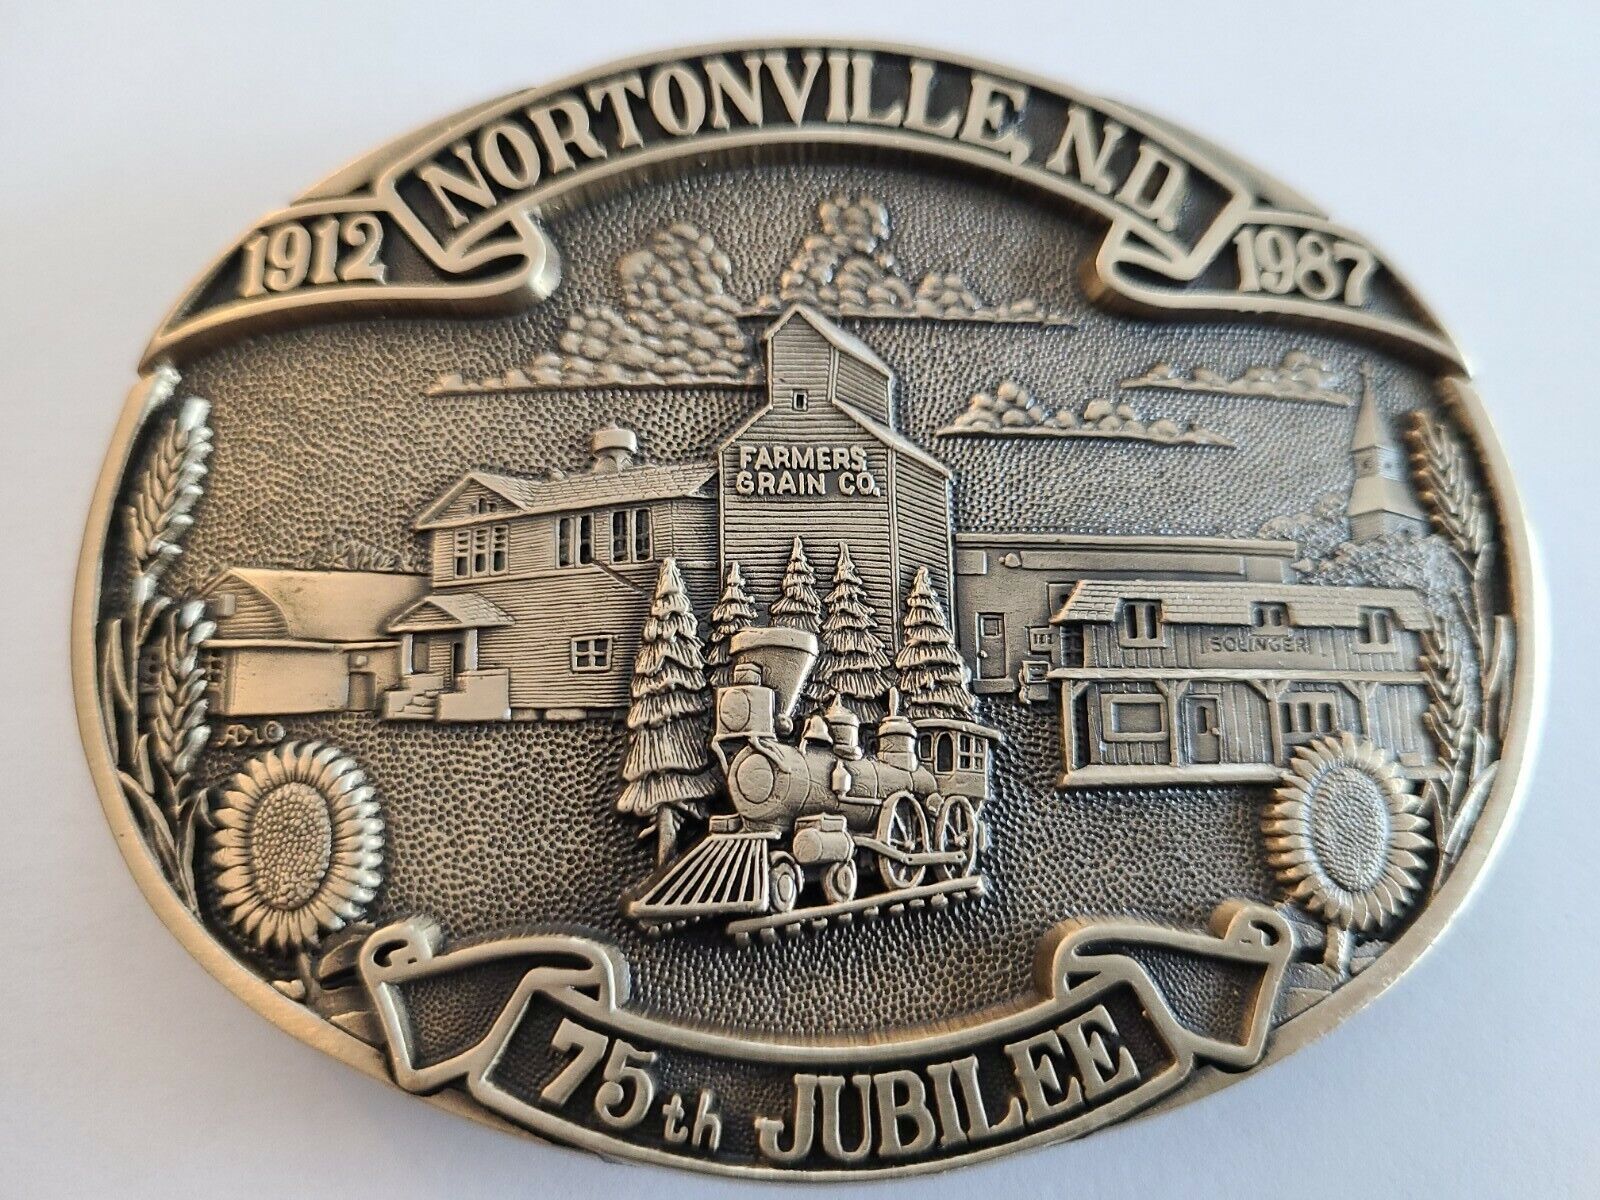 VTG North Dakota Belt Buckle Nortonville 1912-1987 75th Jubilee Solid Brass Mint Без бренда